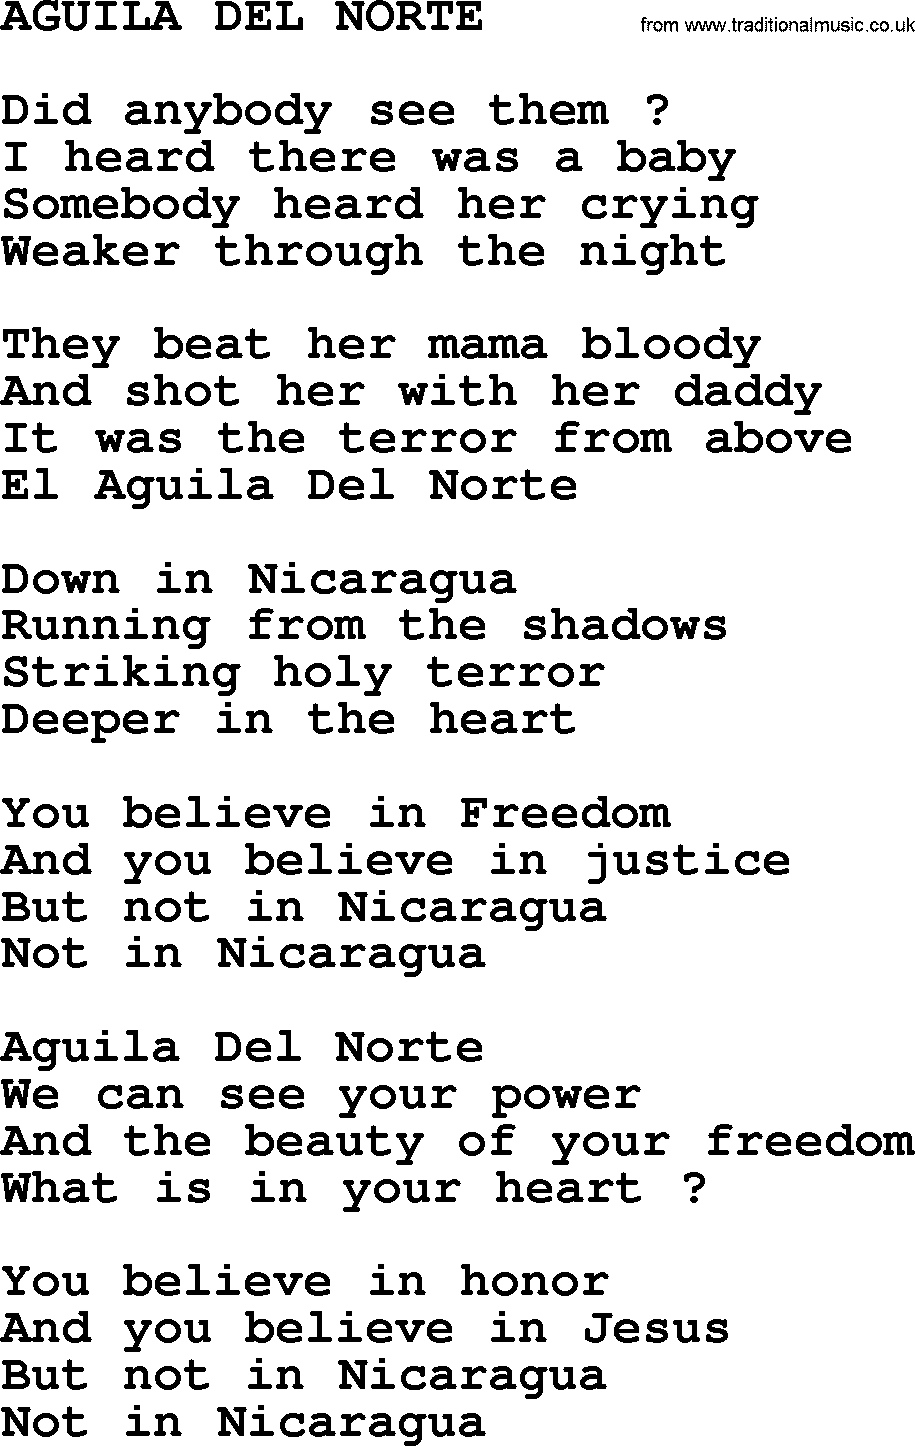 Kris Kristofferson song: Aguila Del Norte lyrics